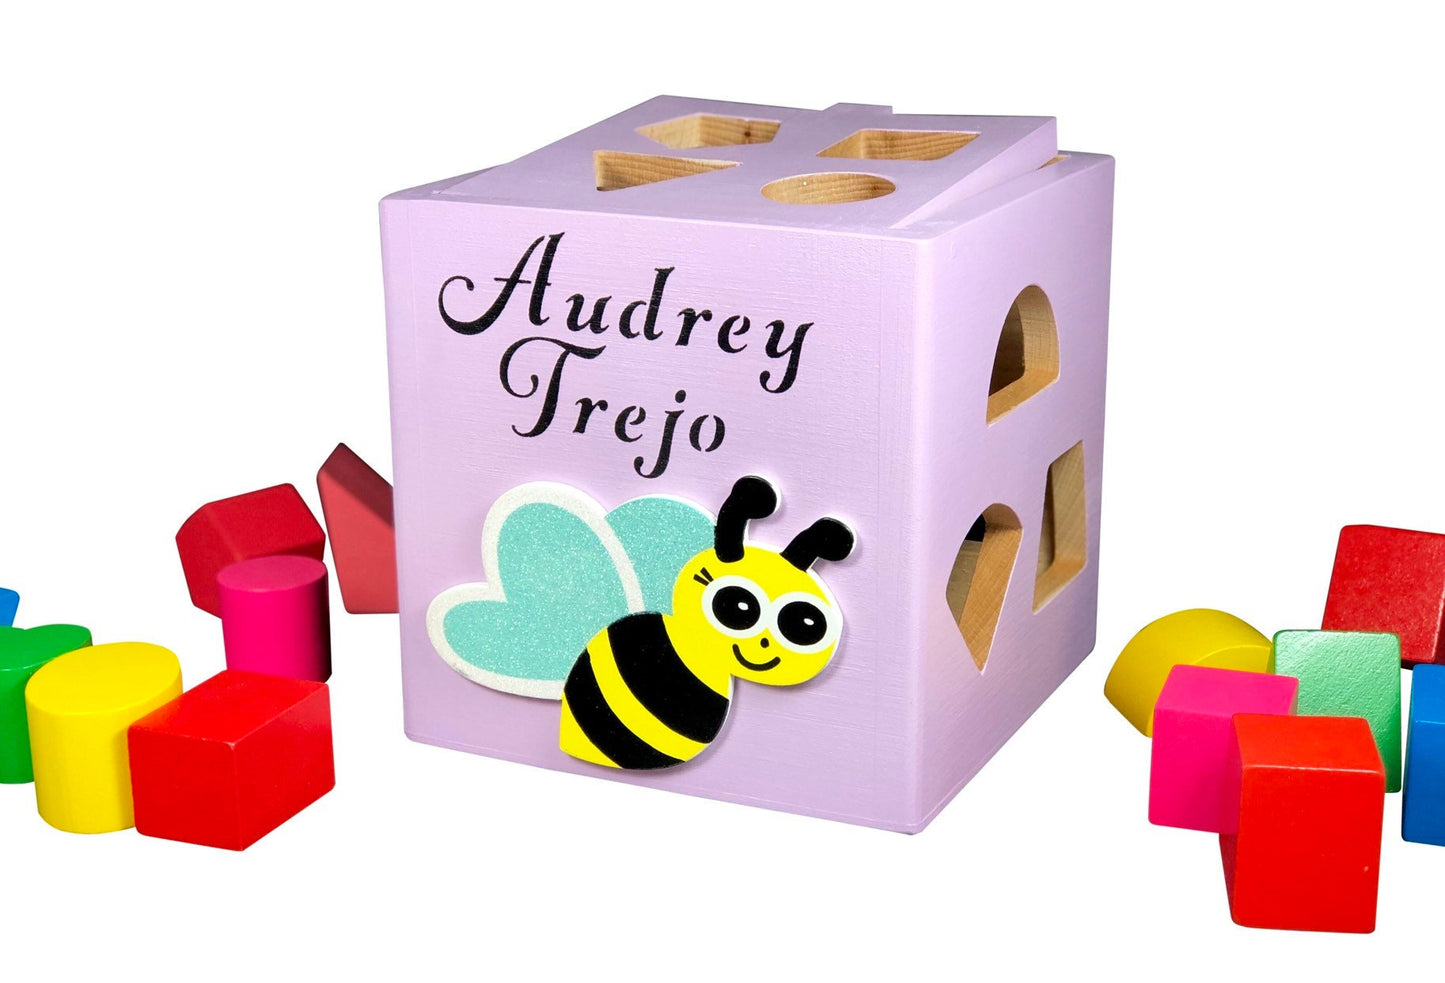 Bumble bee wooden toys / custom pine wood shape sorter